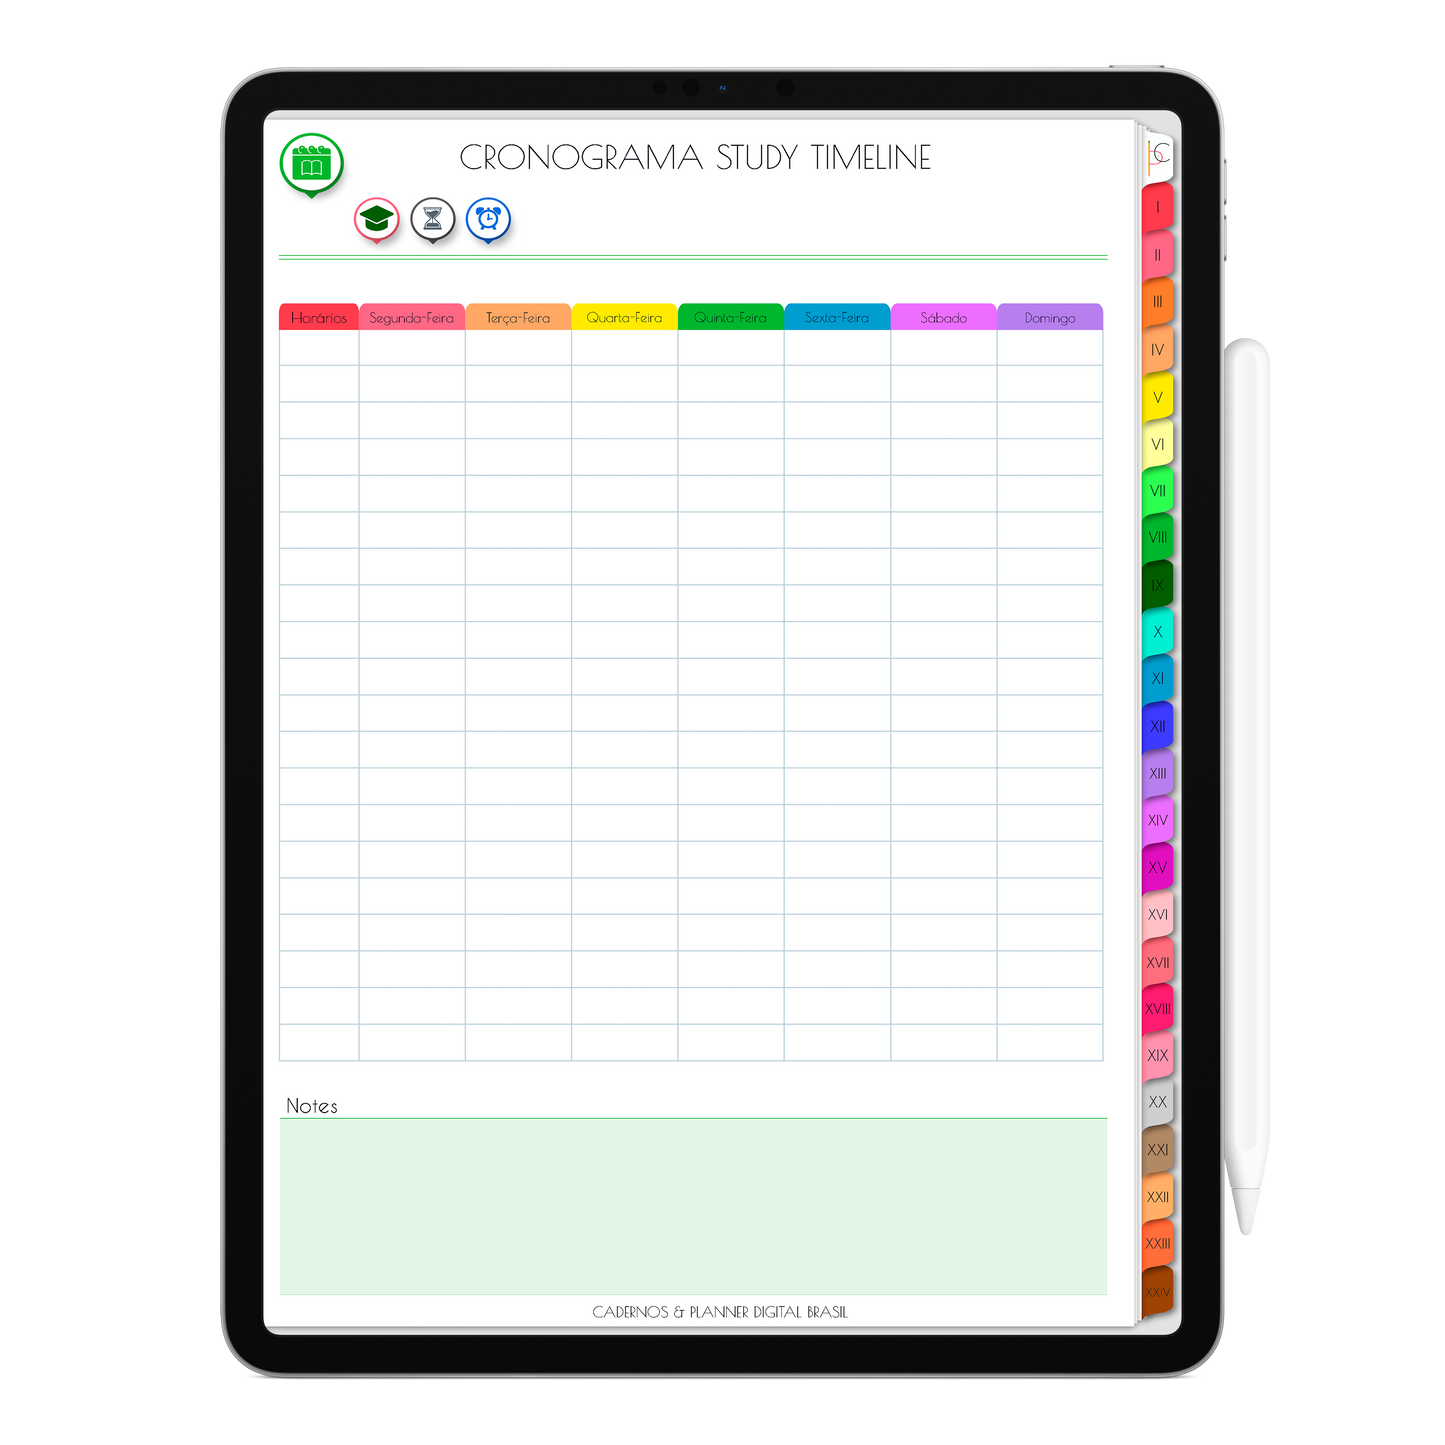 Caderno Digital Colors 24 Matérias Infinito Astral • Para iPad e Tablet Android • Download instantâneo